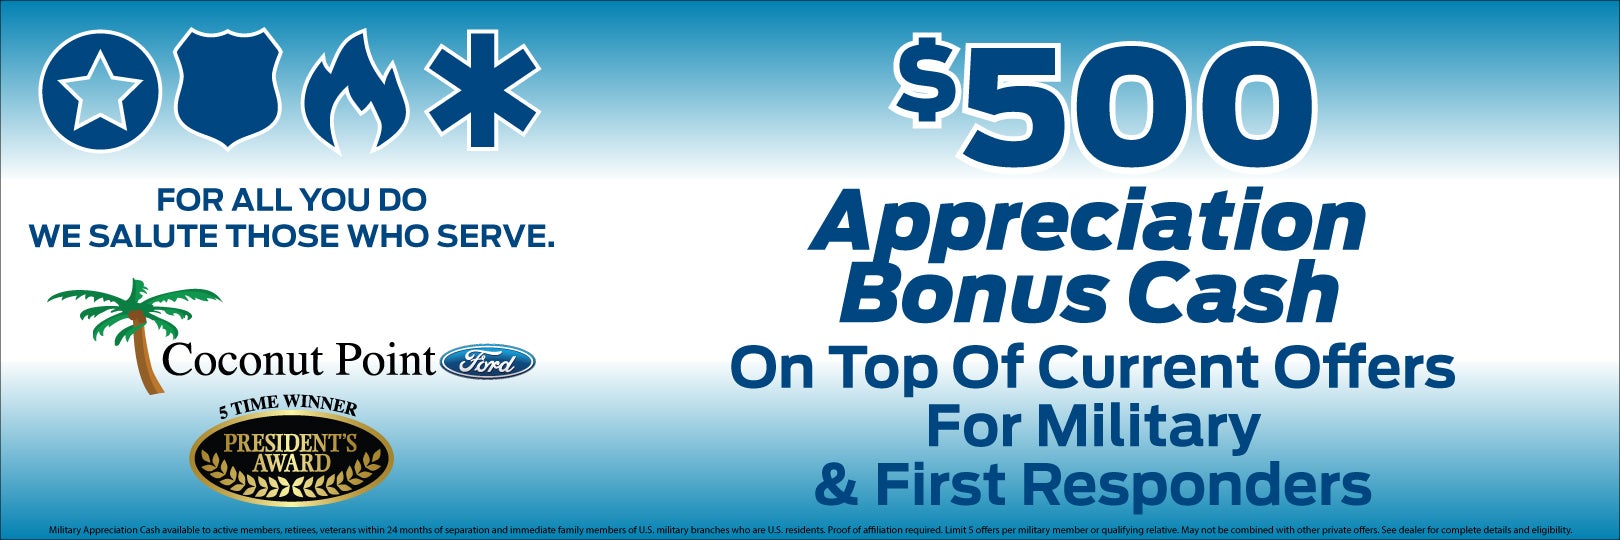 $500 Appreciation Bonus Cash